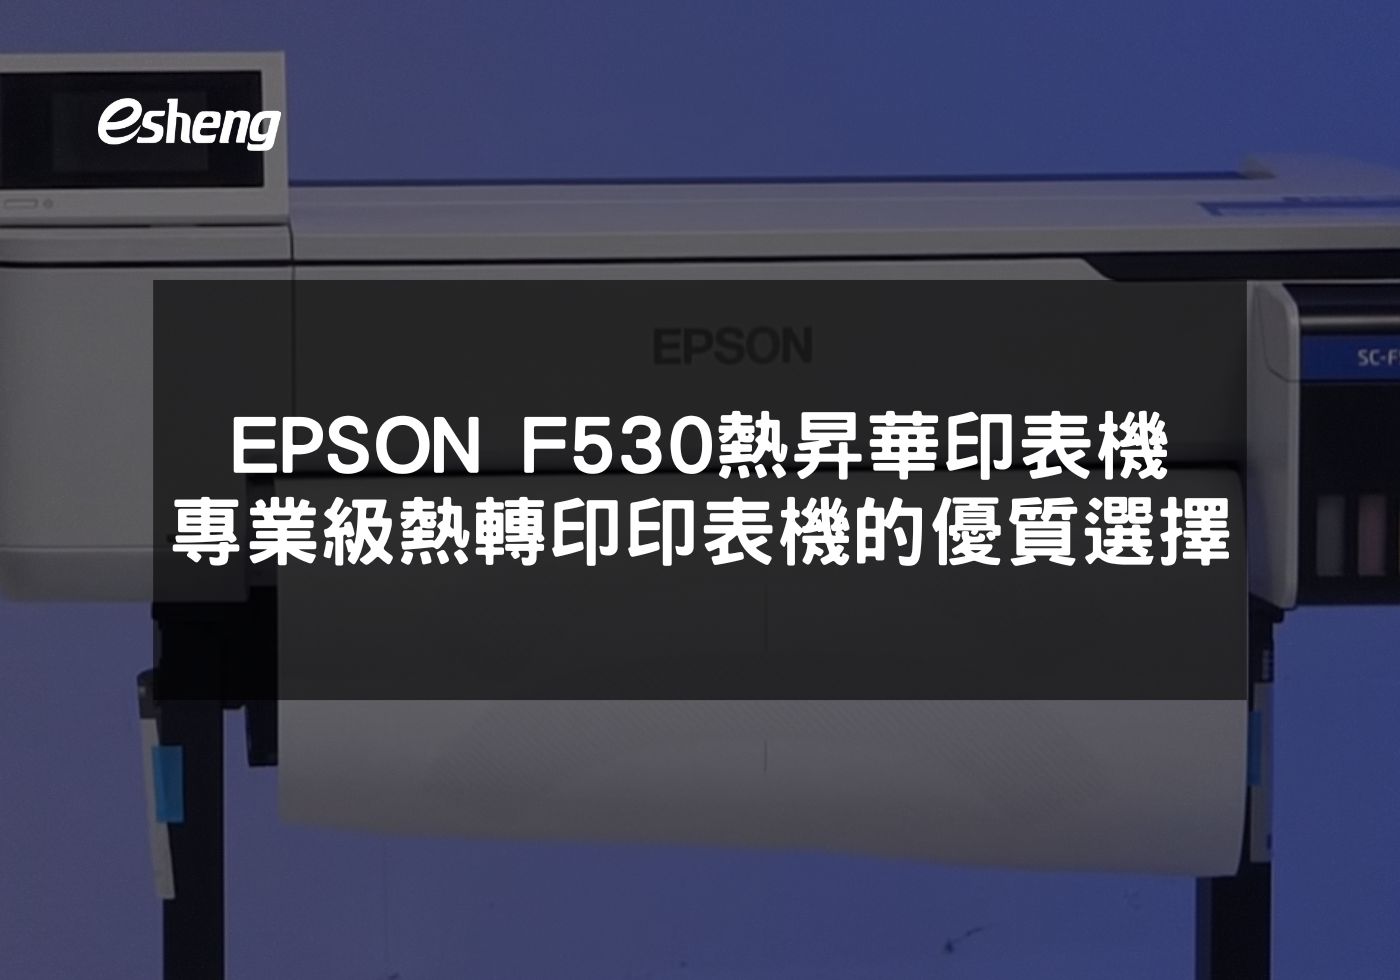 EPSON F530熱昇華印表機提升專業印刷品質